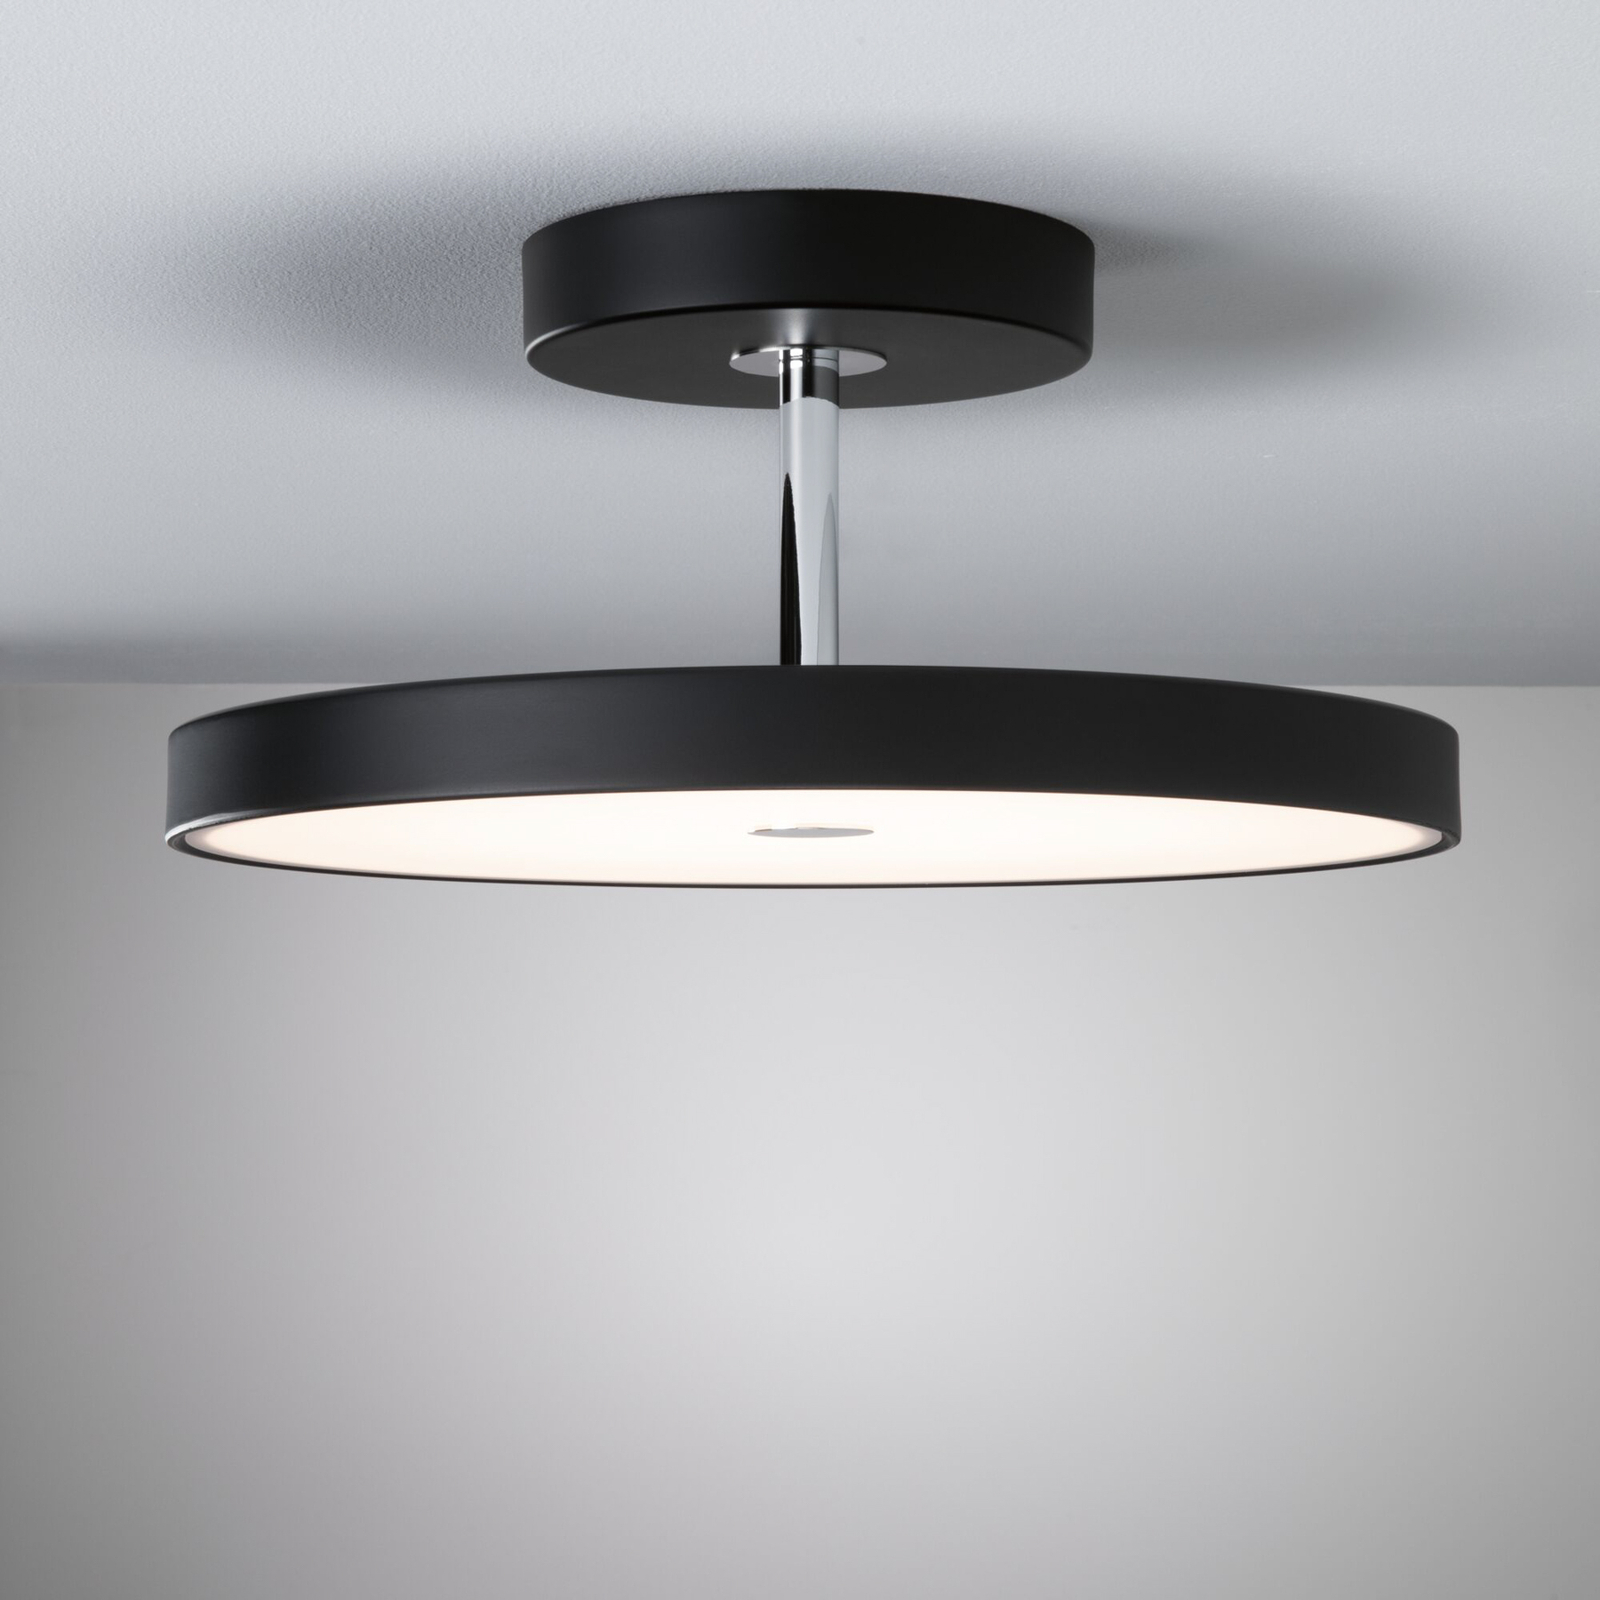 Paulmann Hildor LED ceiling light, ZigBee, black